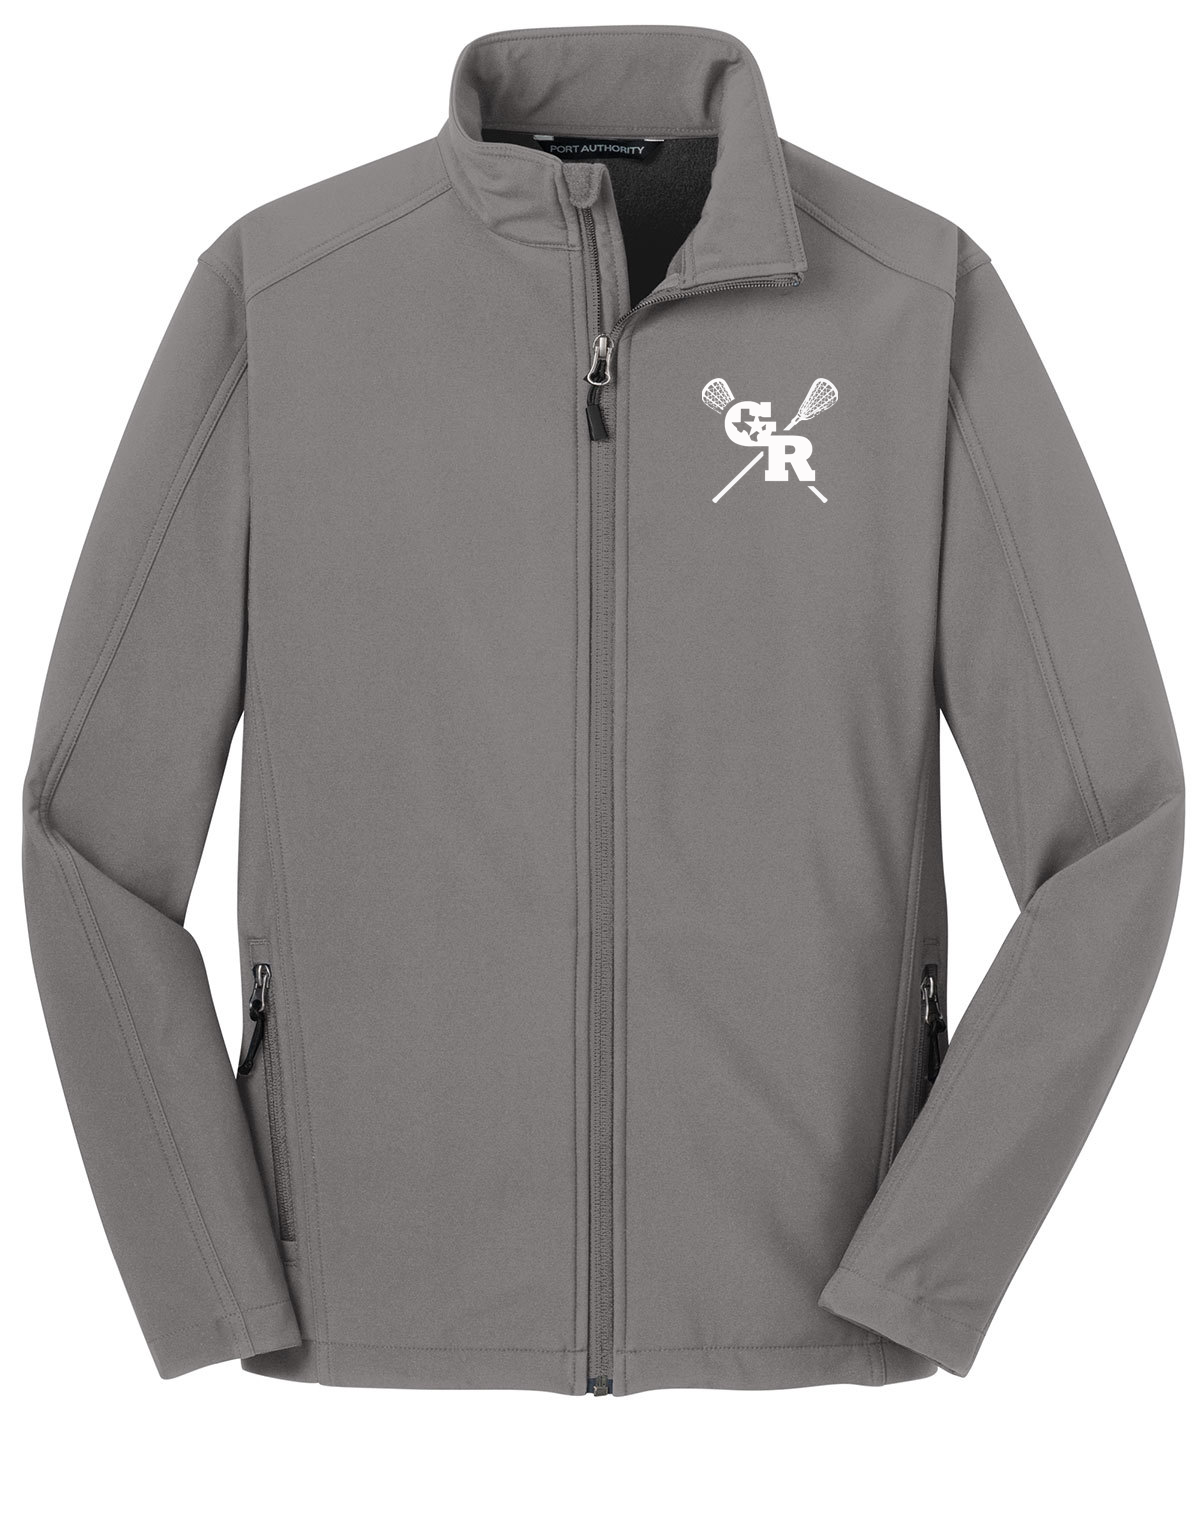 GR Longhorns Lacrosse Men's Soft Shell Jacket